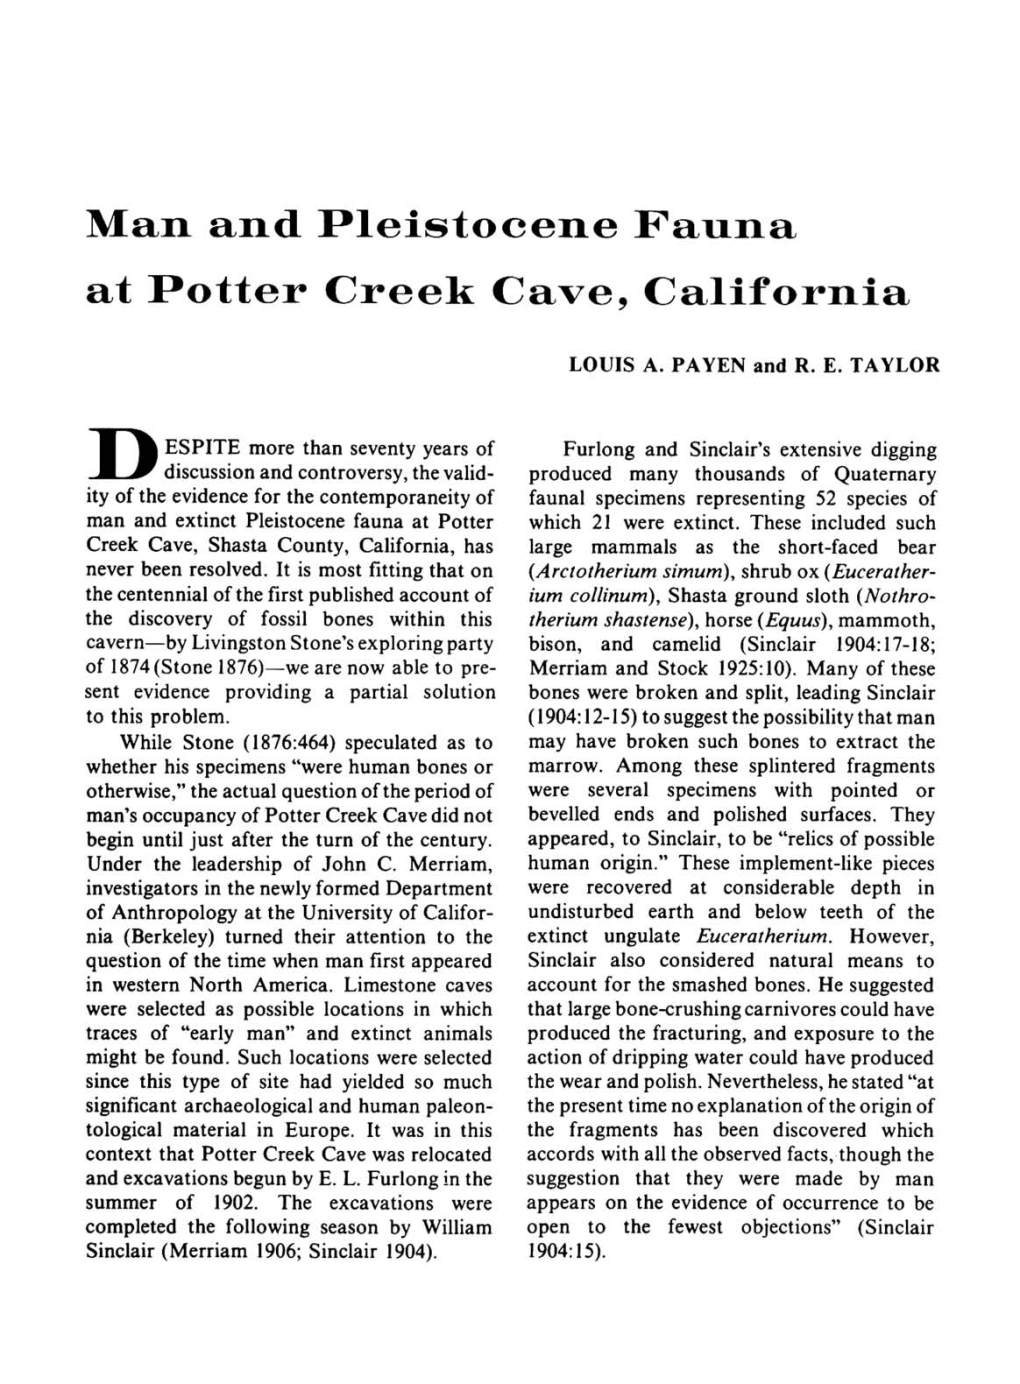 Man and the Pleistocene Fauna at Potter Creek Cave, California